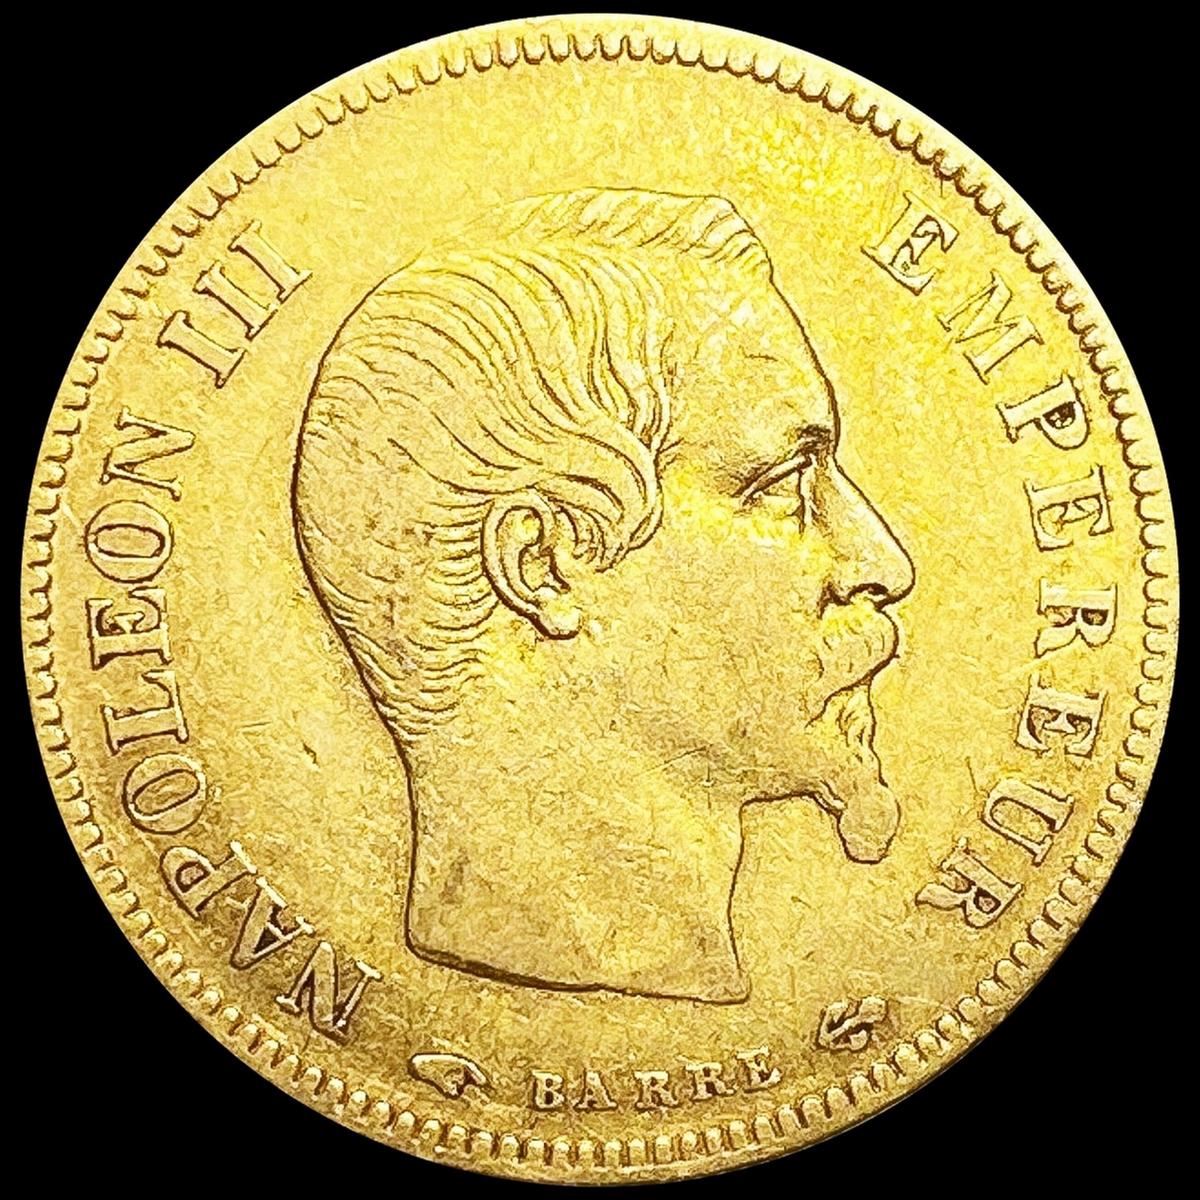 1856 France .0933oz Gold 10 Francs NICELY CIRCULAT